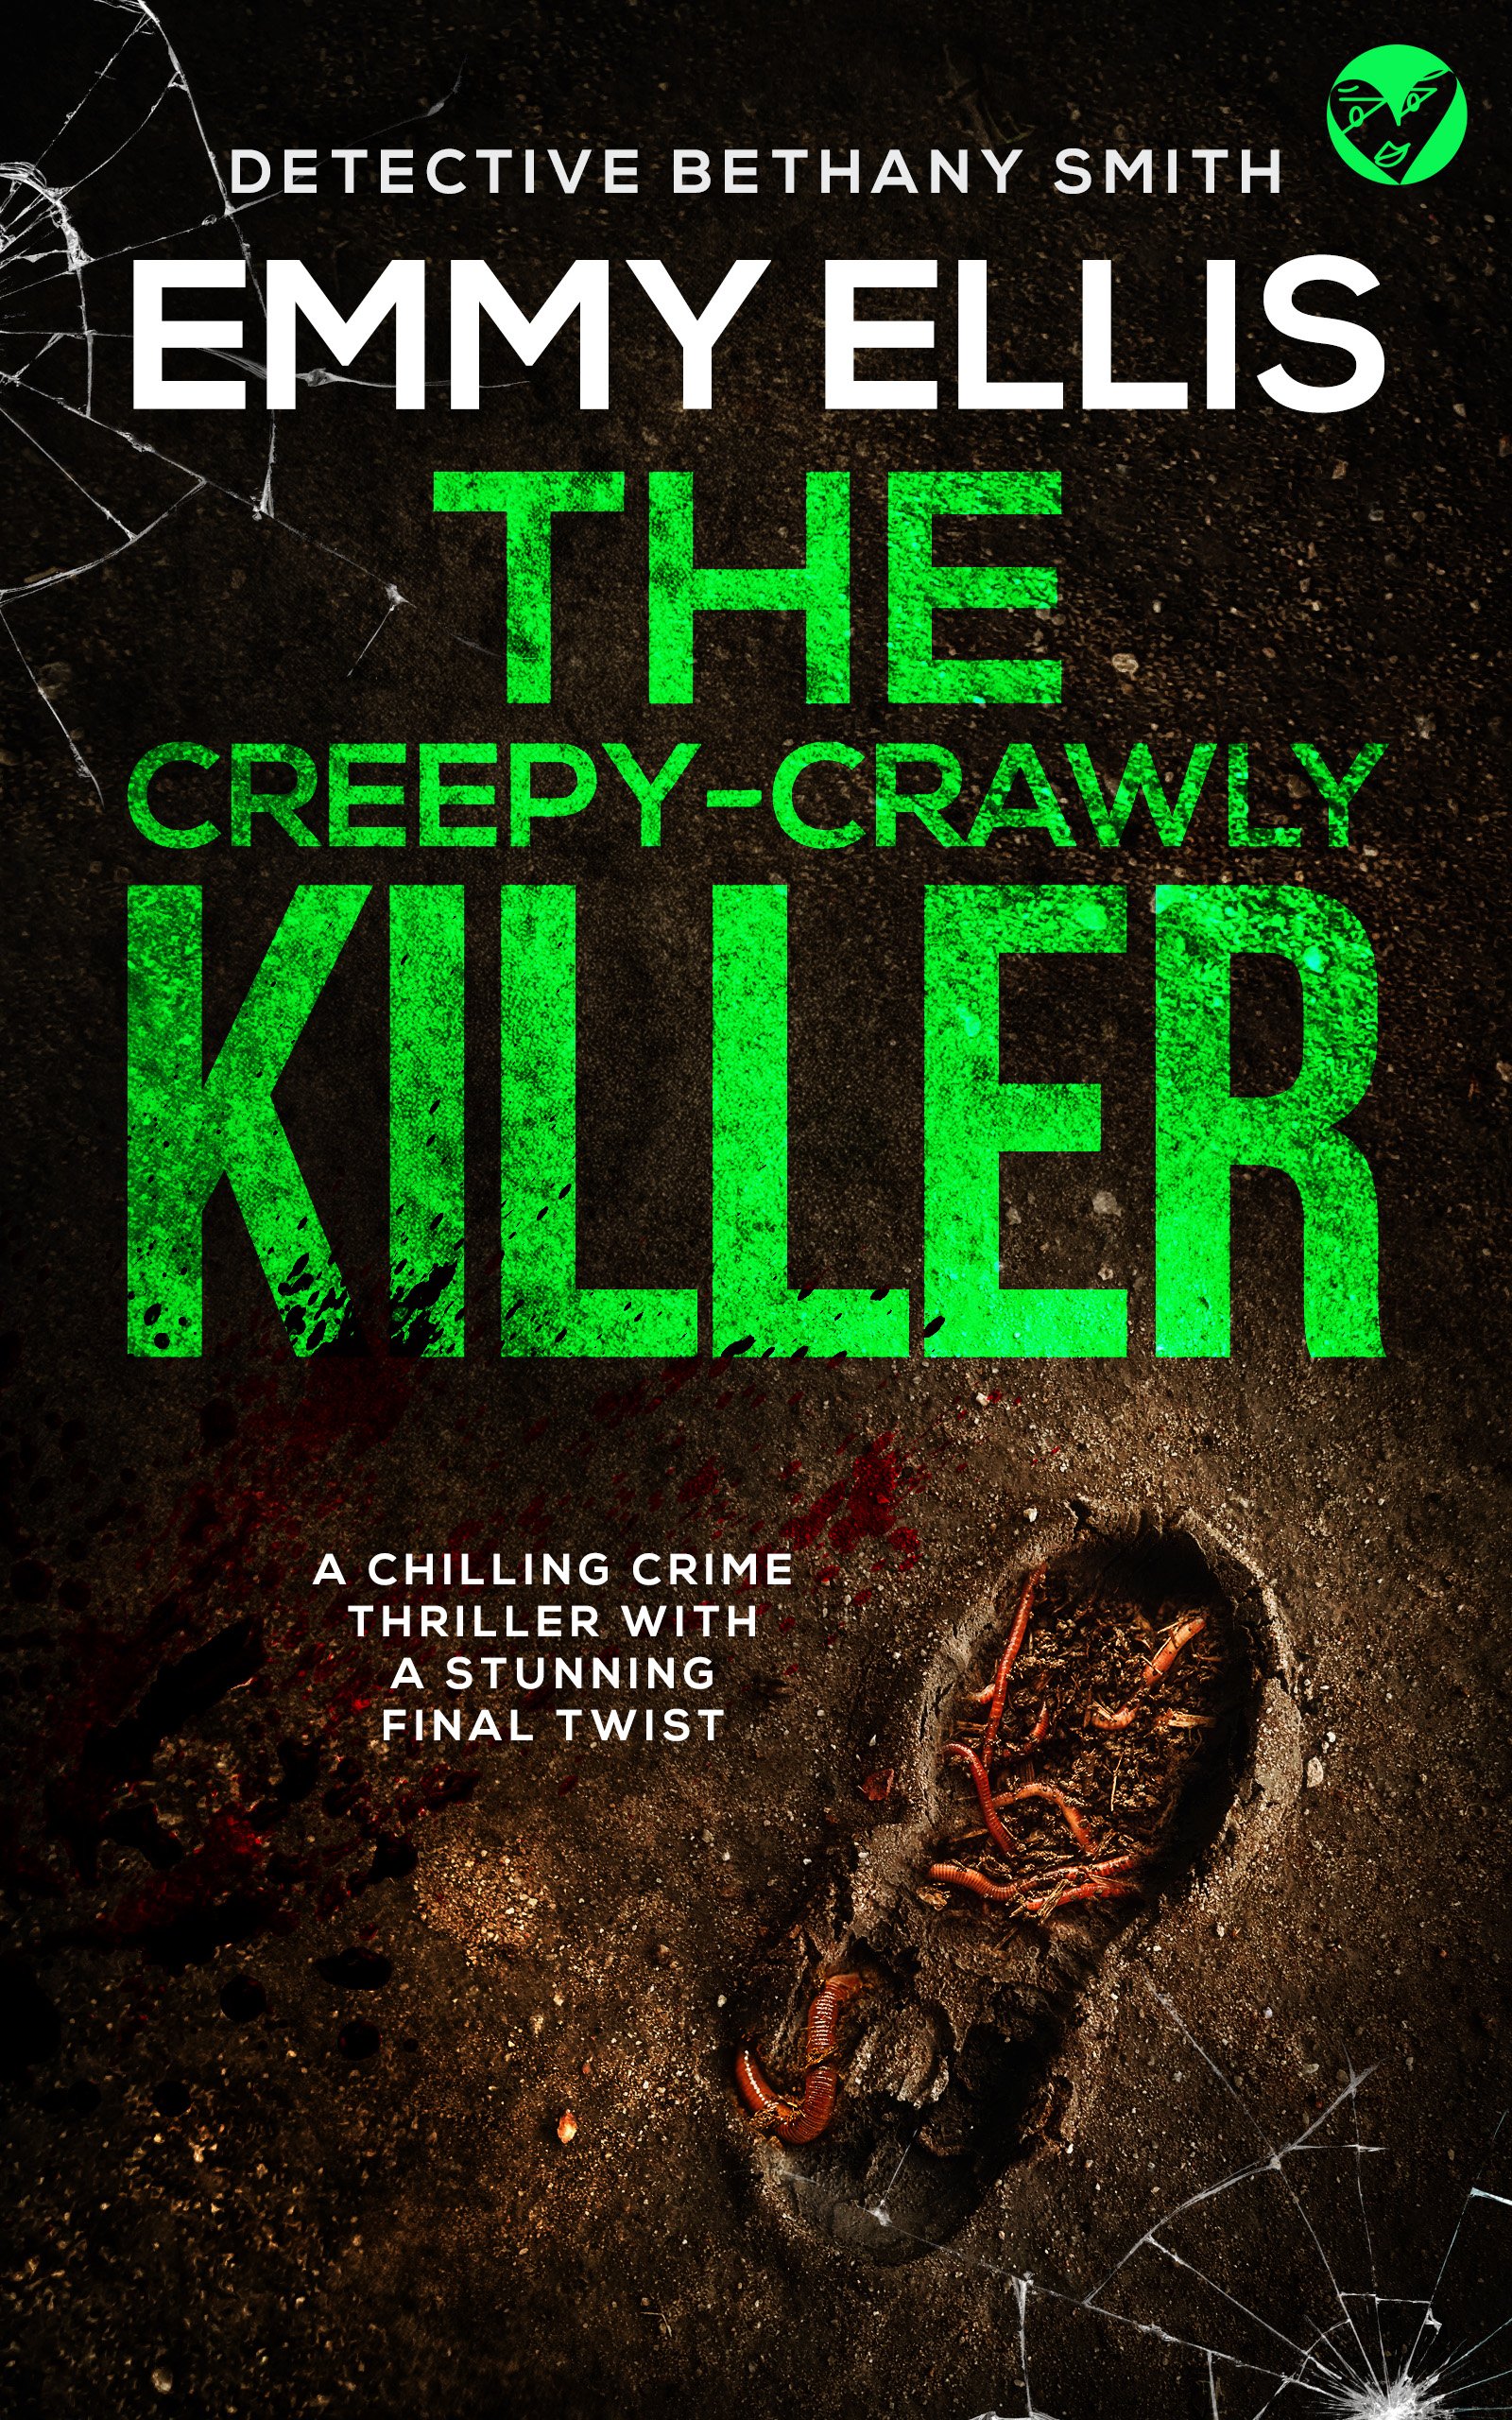 THE CREEPY-CRAWLY KILLER Cover publish.jpg